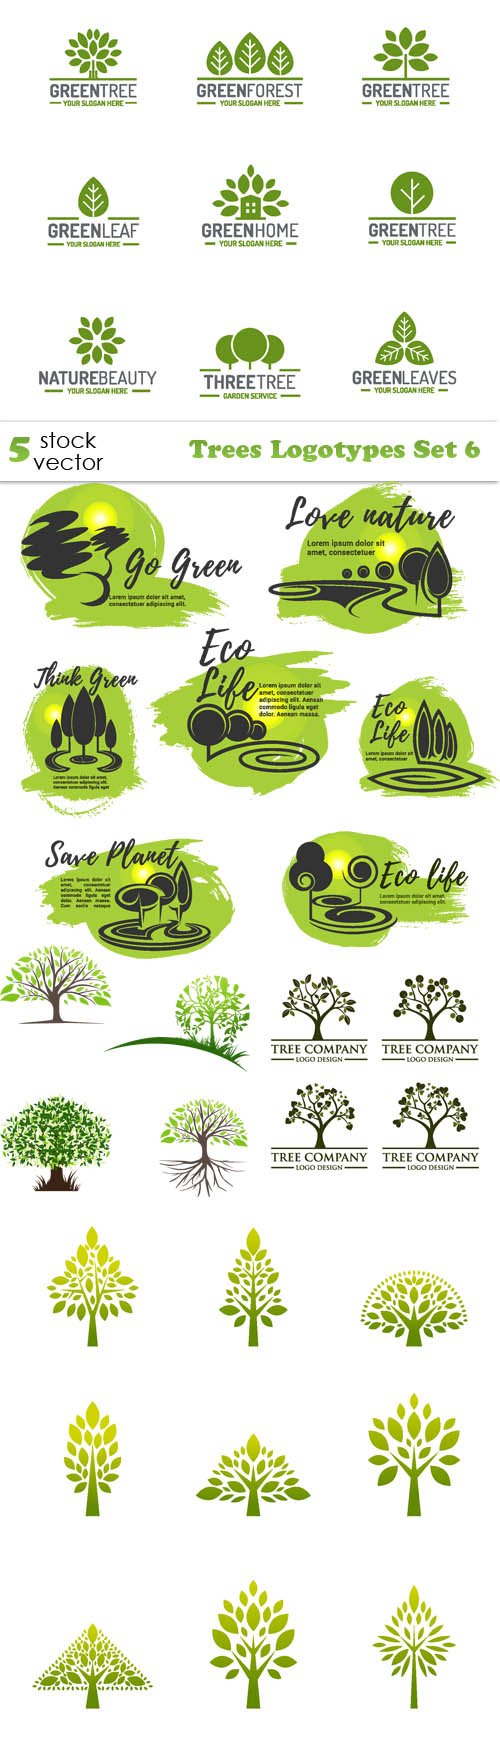 Vectors - Trees Logotypes Set 6